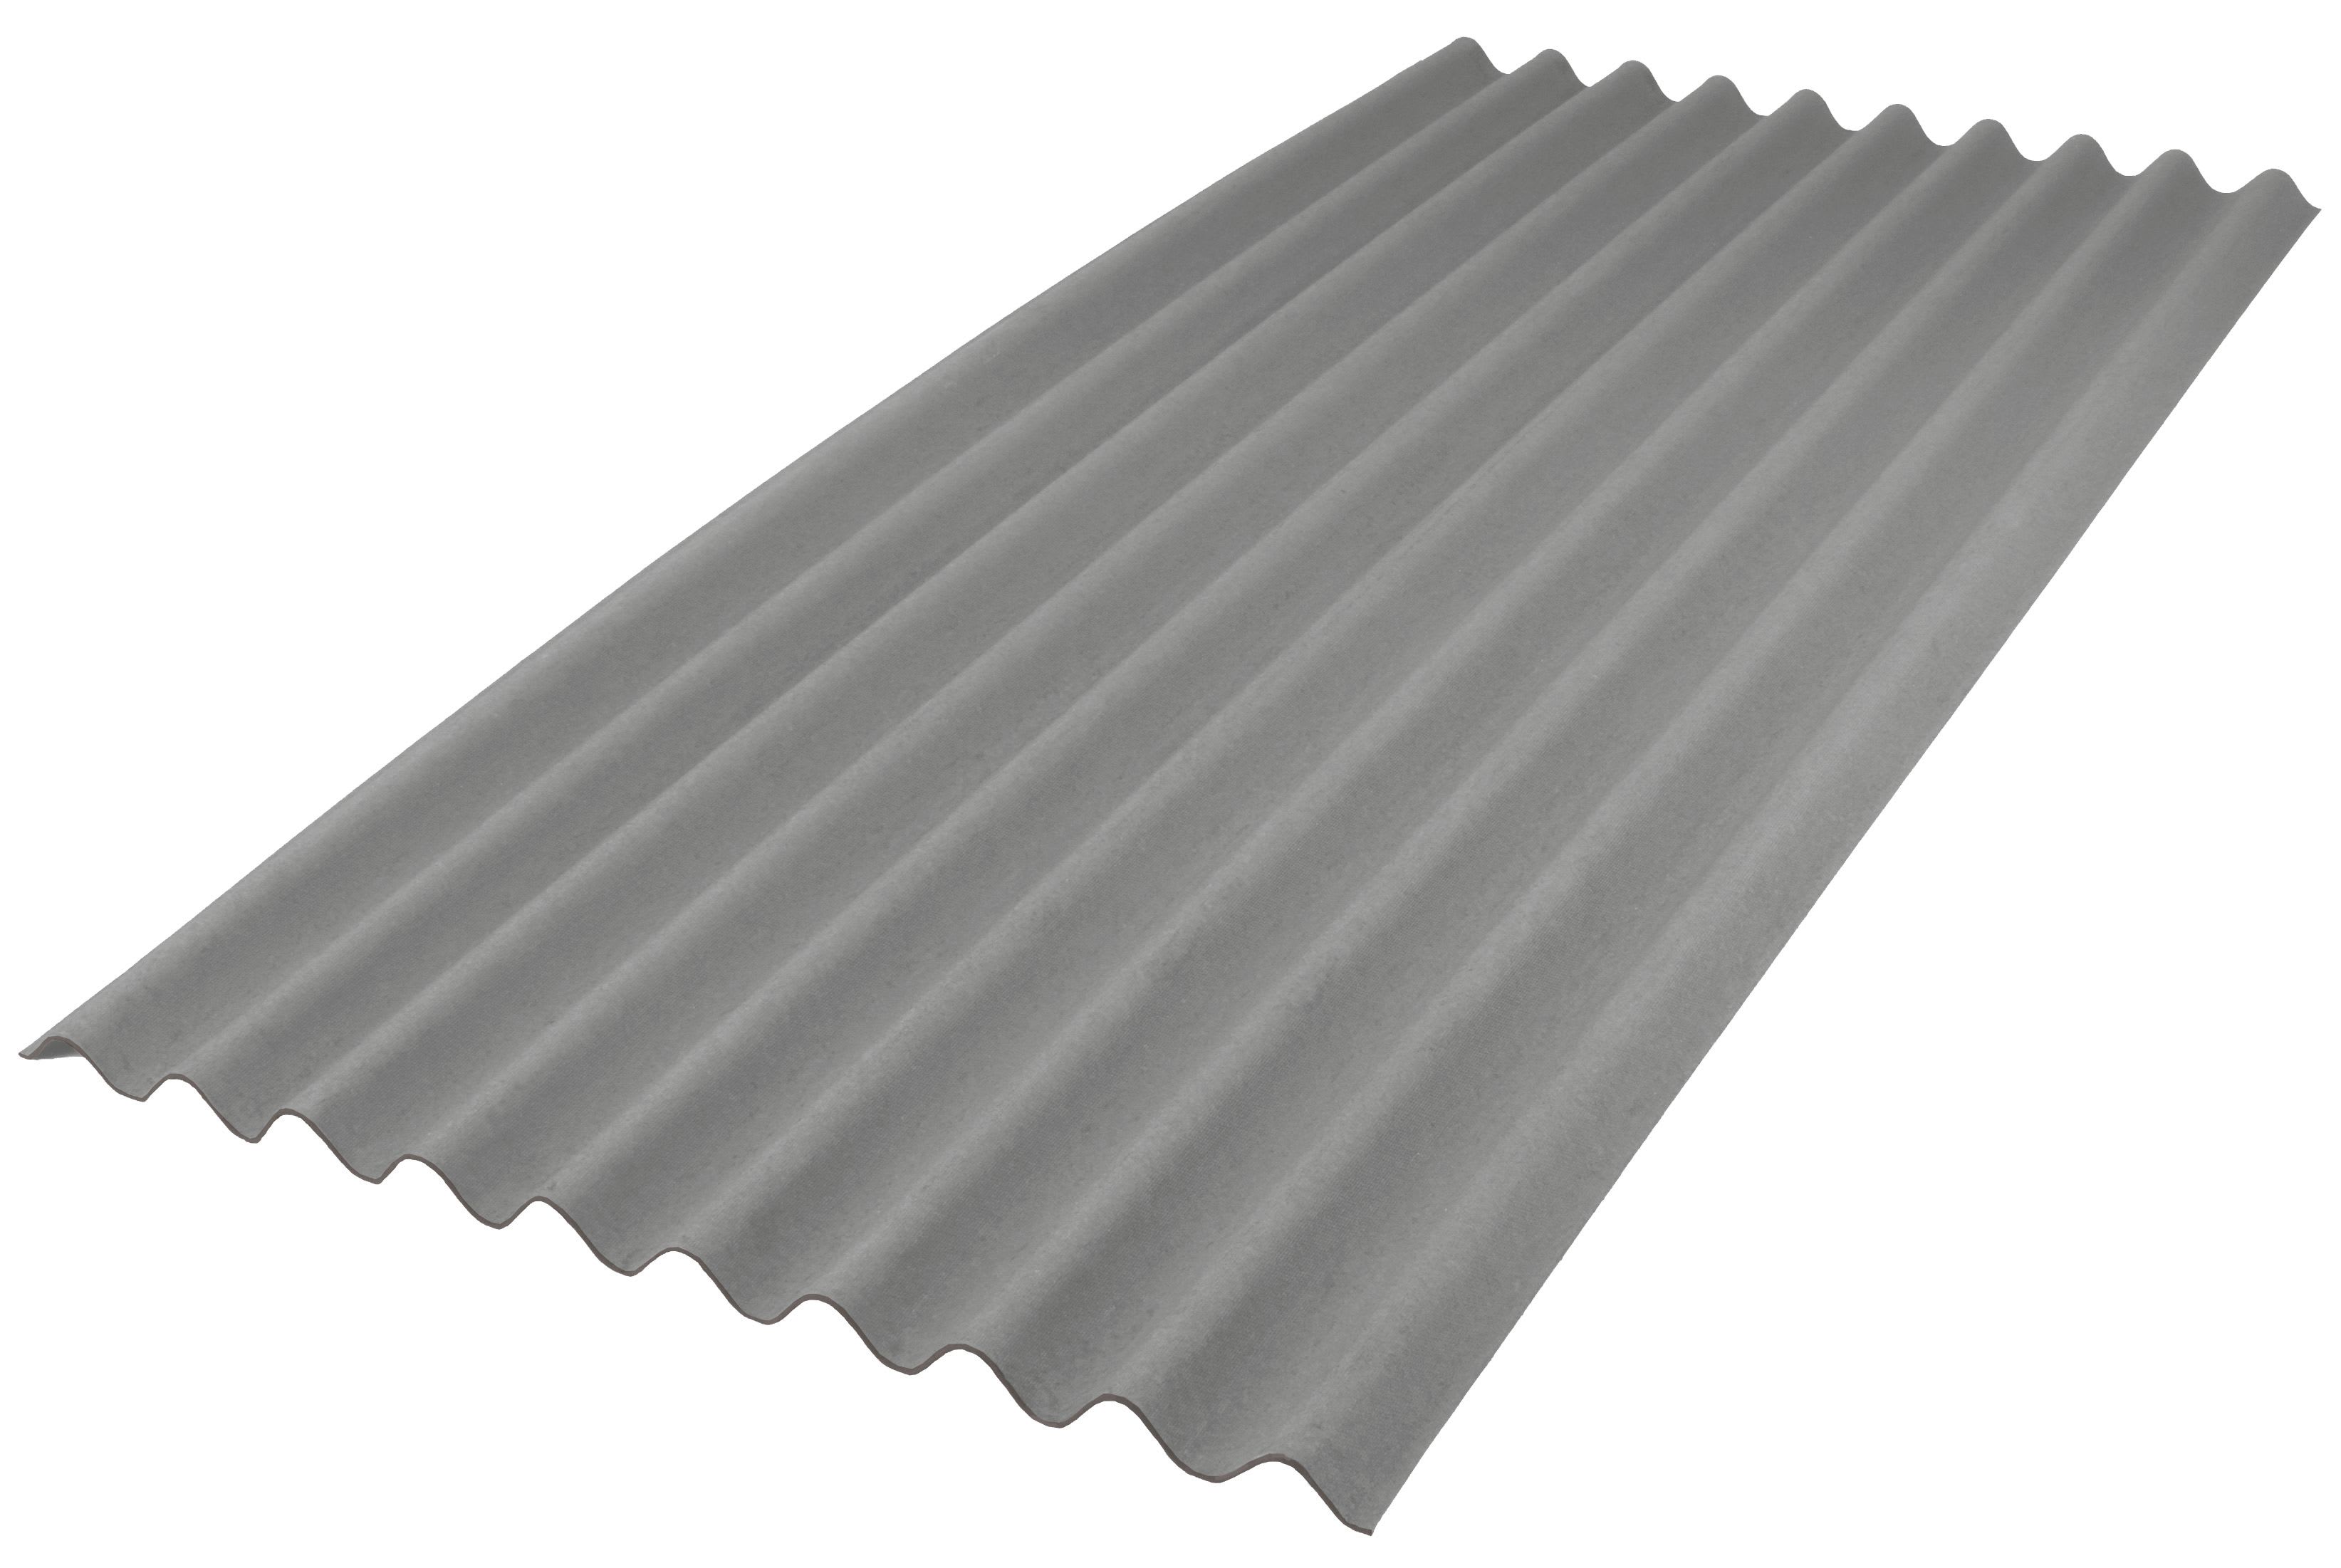 Onduline Intensive Grey Bitumen Corrugated Roof Sheet -